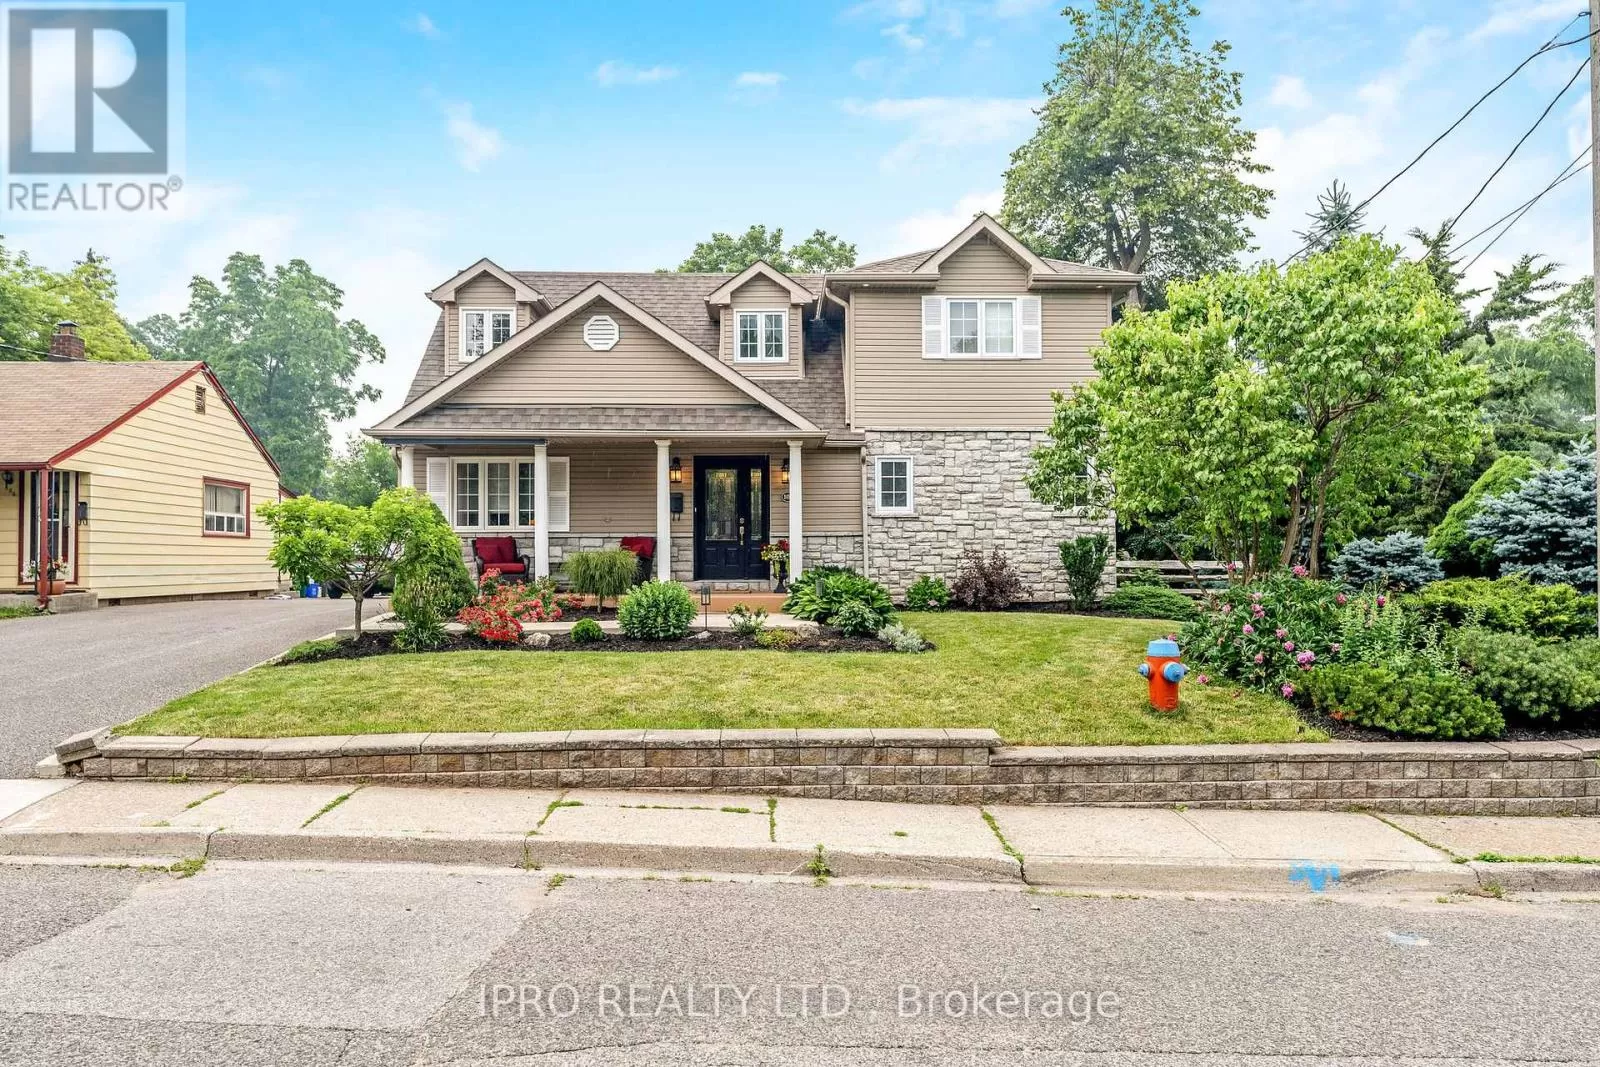 House for rent: 104 Charles St, Halton Hills, Ontario L7G 2M9